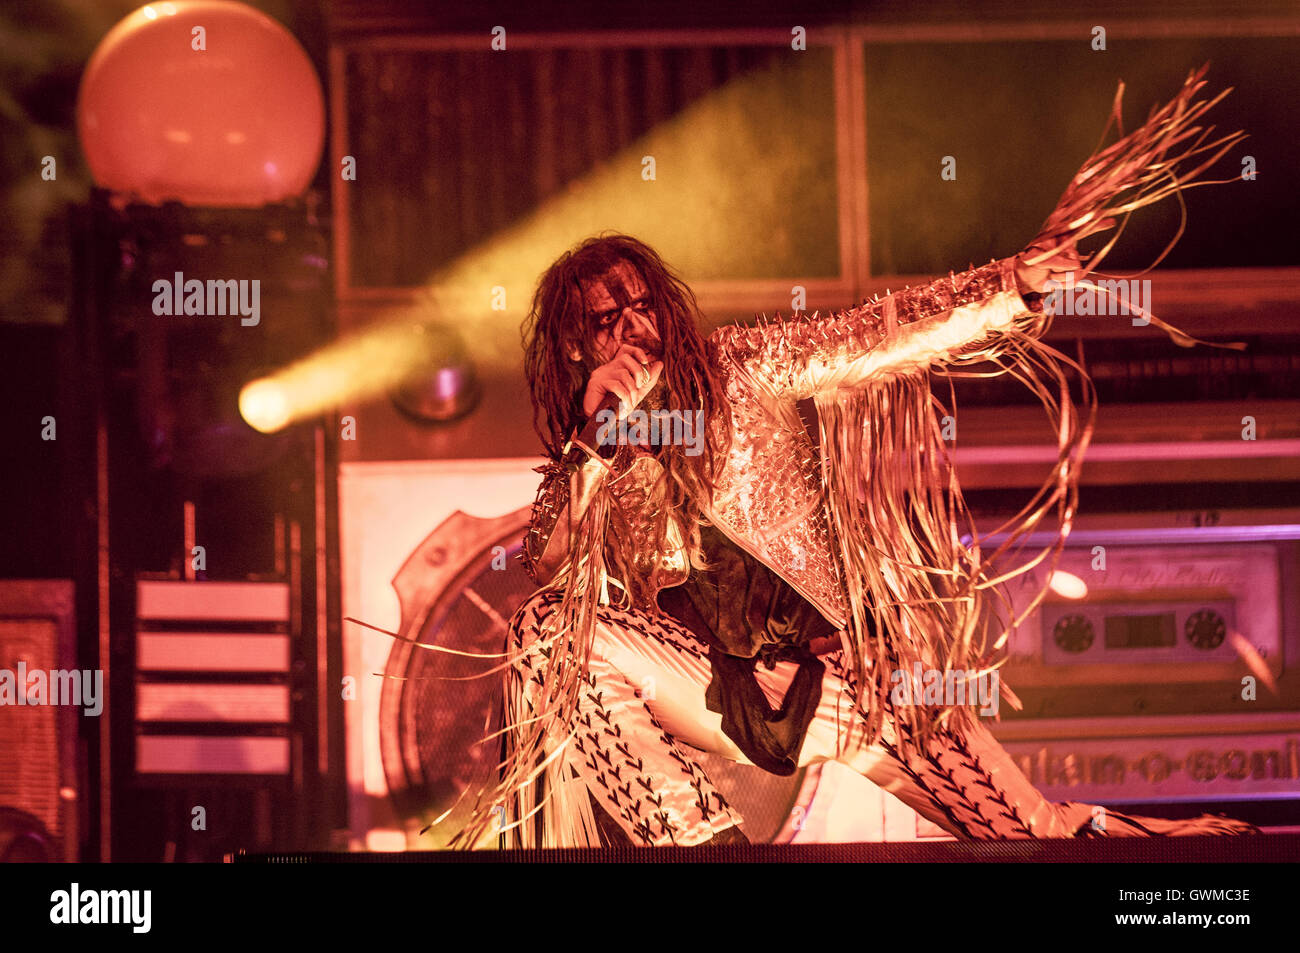 Rock auf der Reihe 2016 Musikfestival MAPFRE-Stadion in Columbus, Ohio, USA am 21. Mai 2016 mit: Rob Zombie wo: Columbus, Ohio, Vereinigte Staaten, wann: 21. Mai 2016 Stockfoto